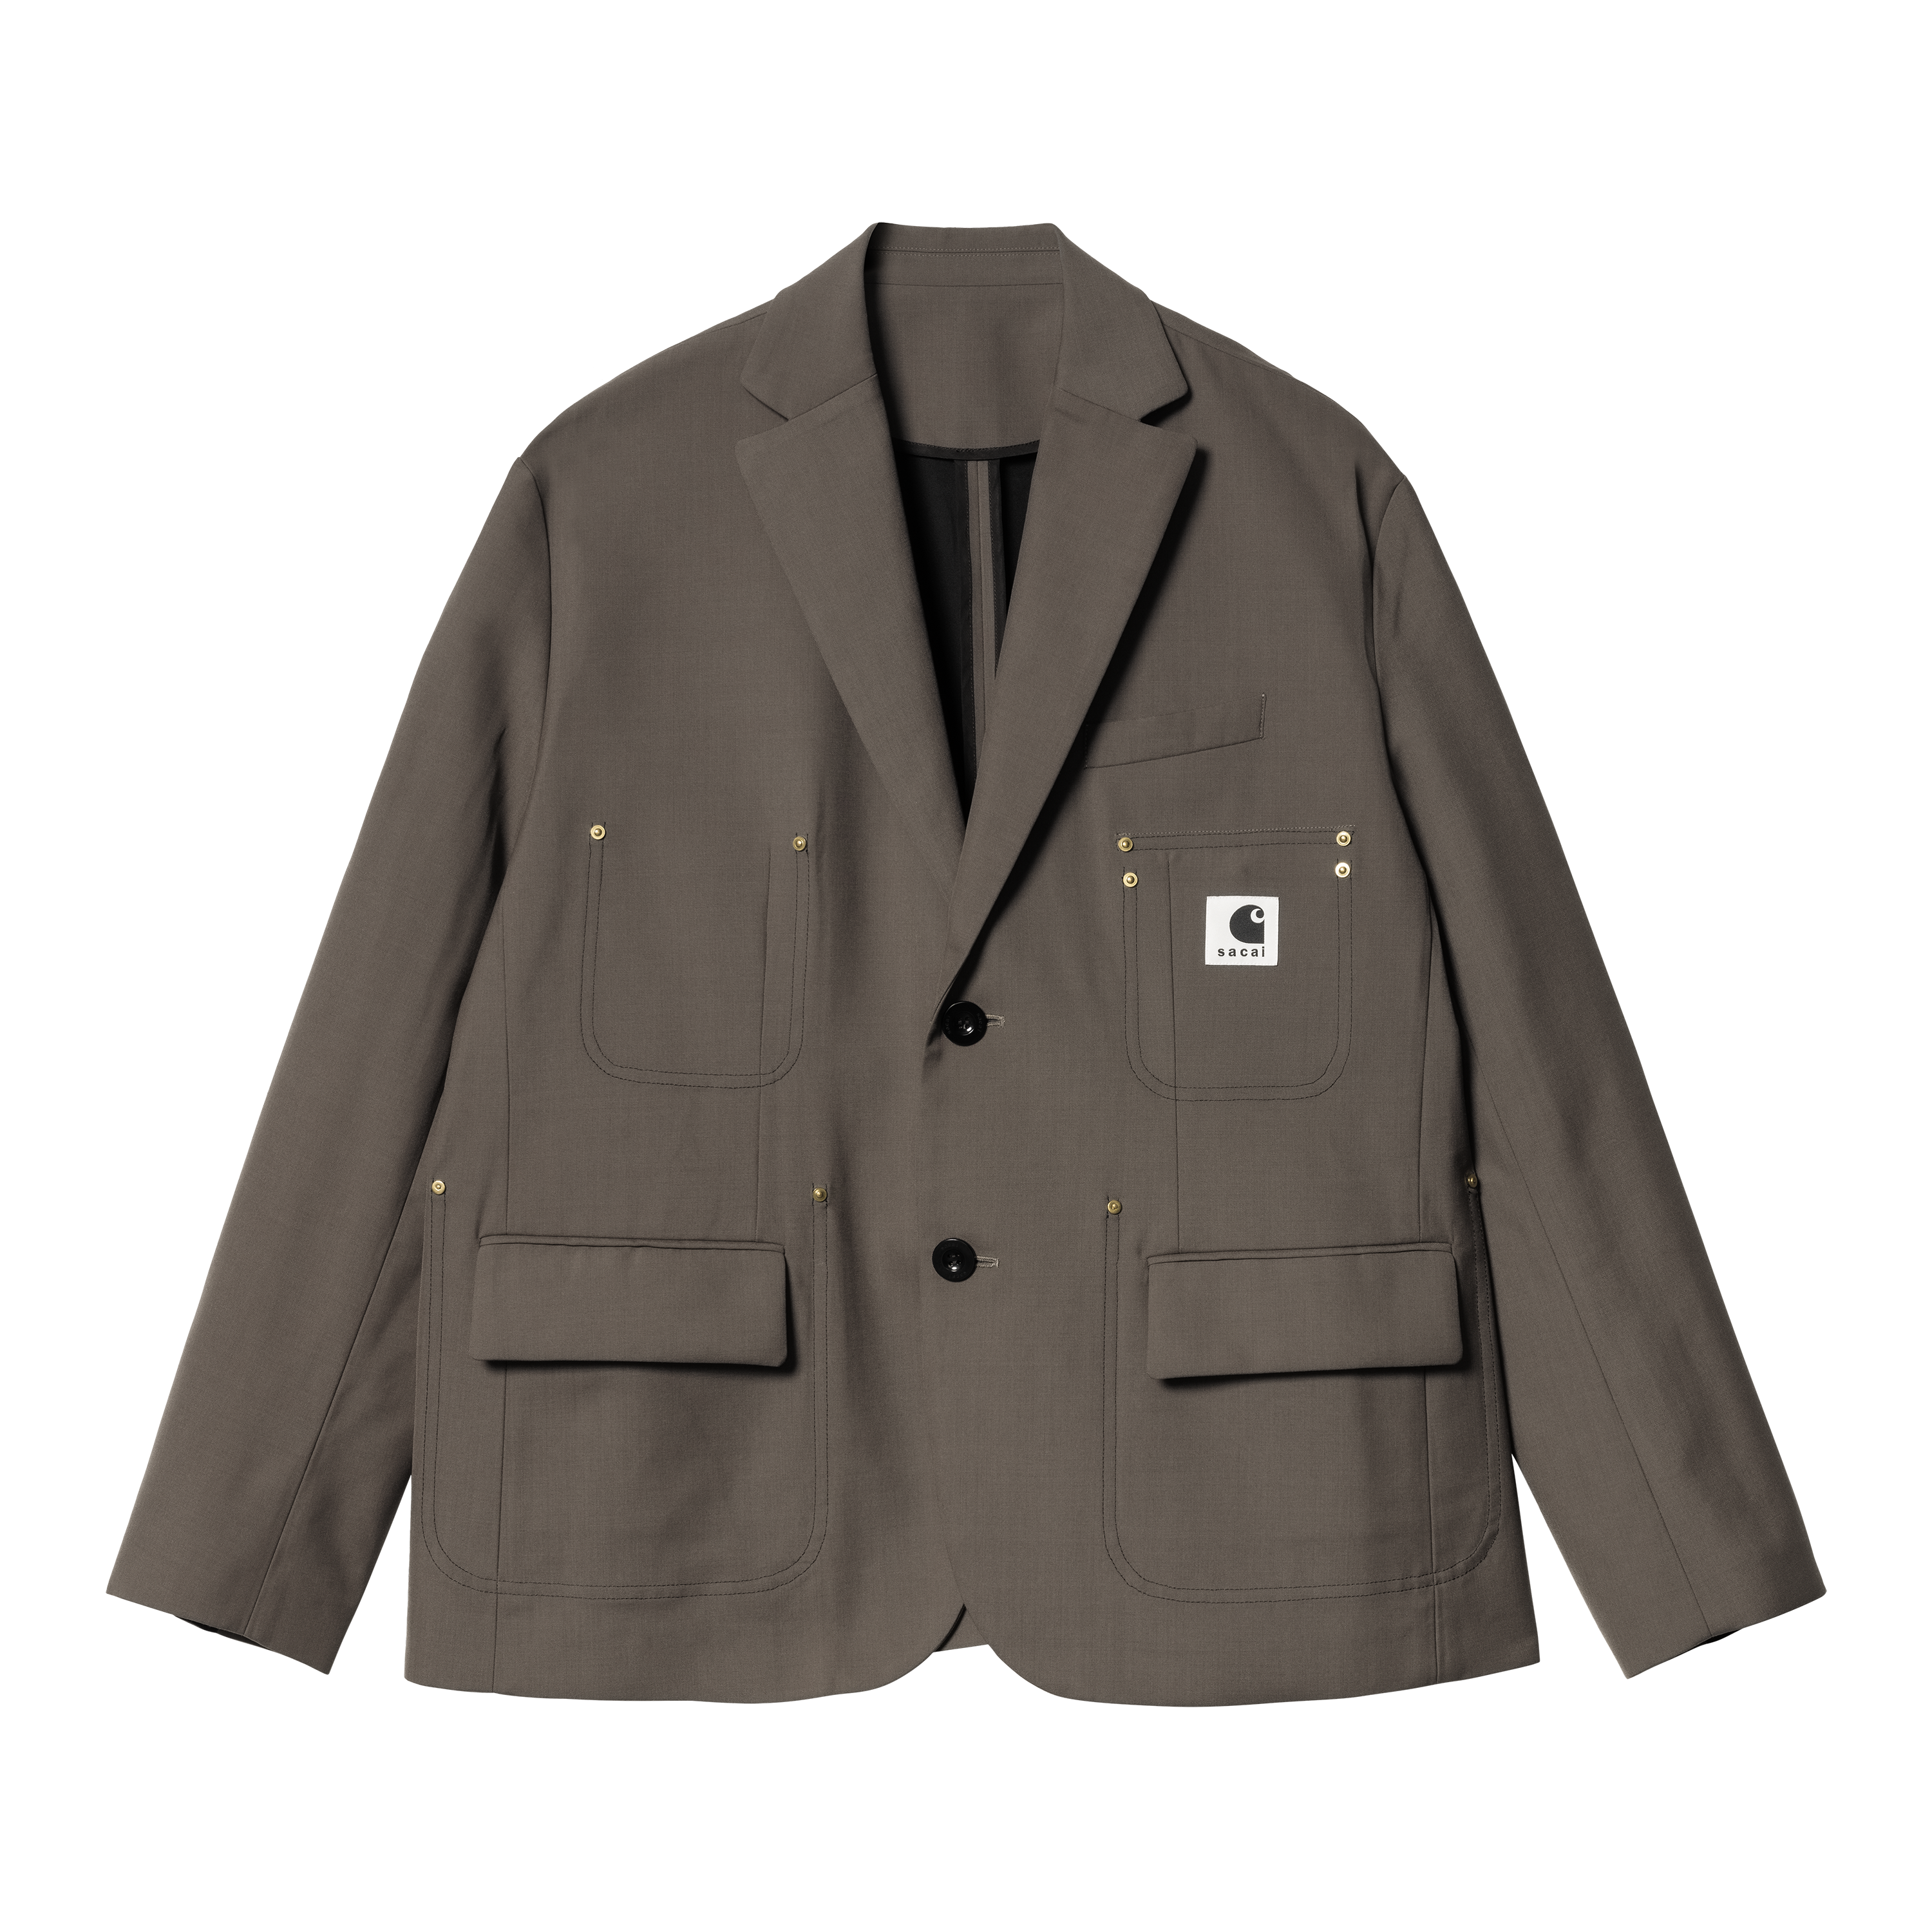 Carhartt WIP sacai x Carhartt WIP Suiting Bonding Jacket in Braun